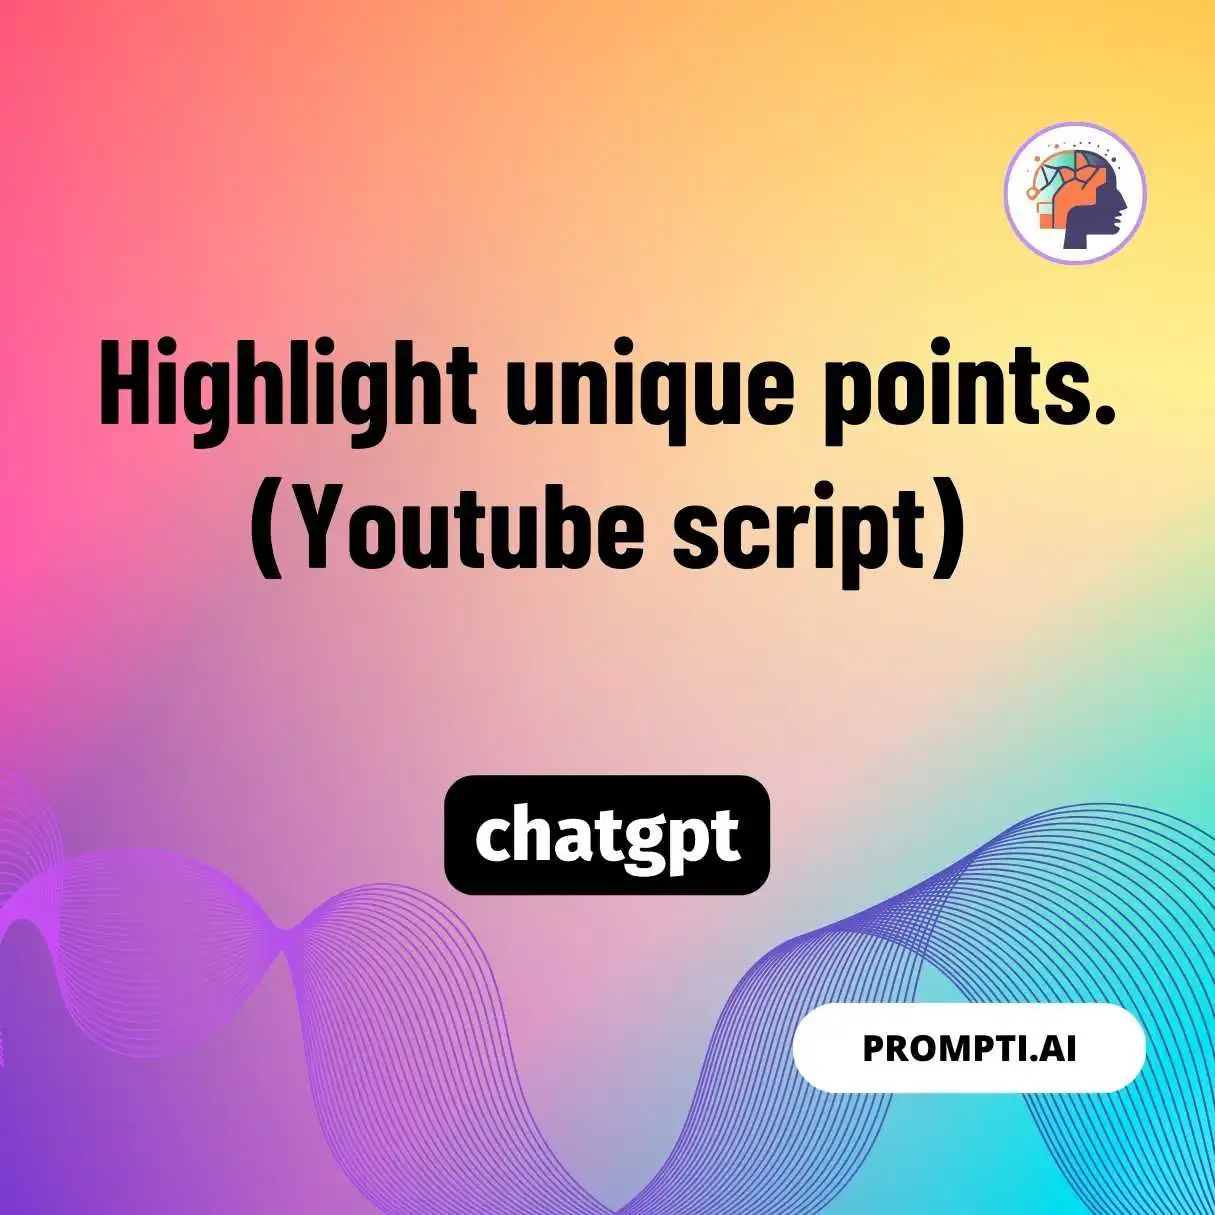 Highlight unique points. (Youtube script)